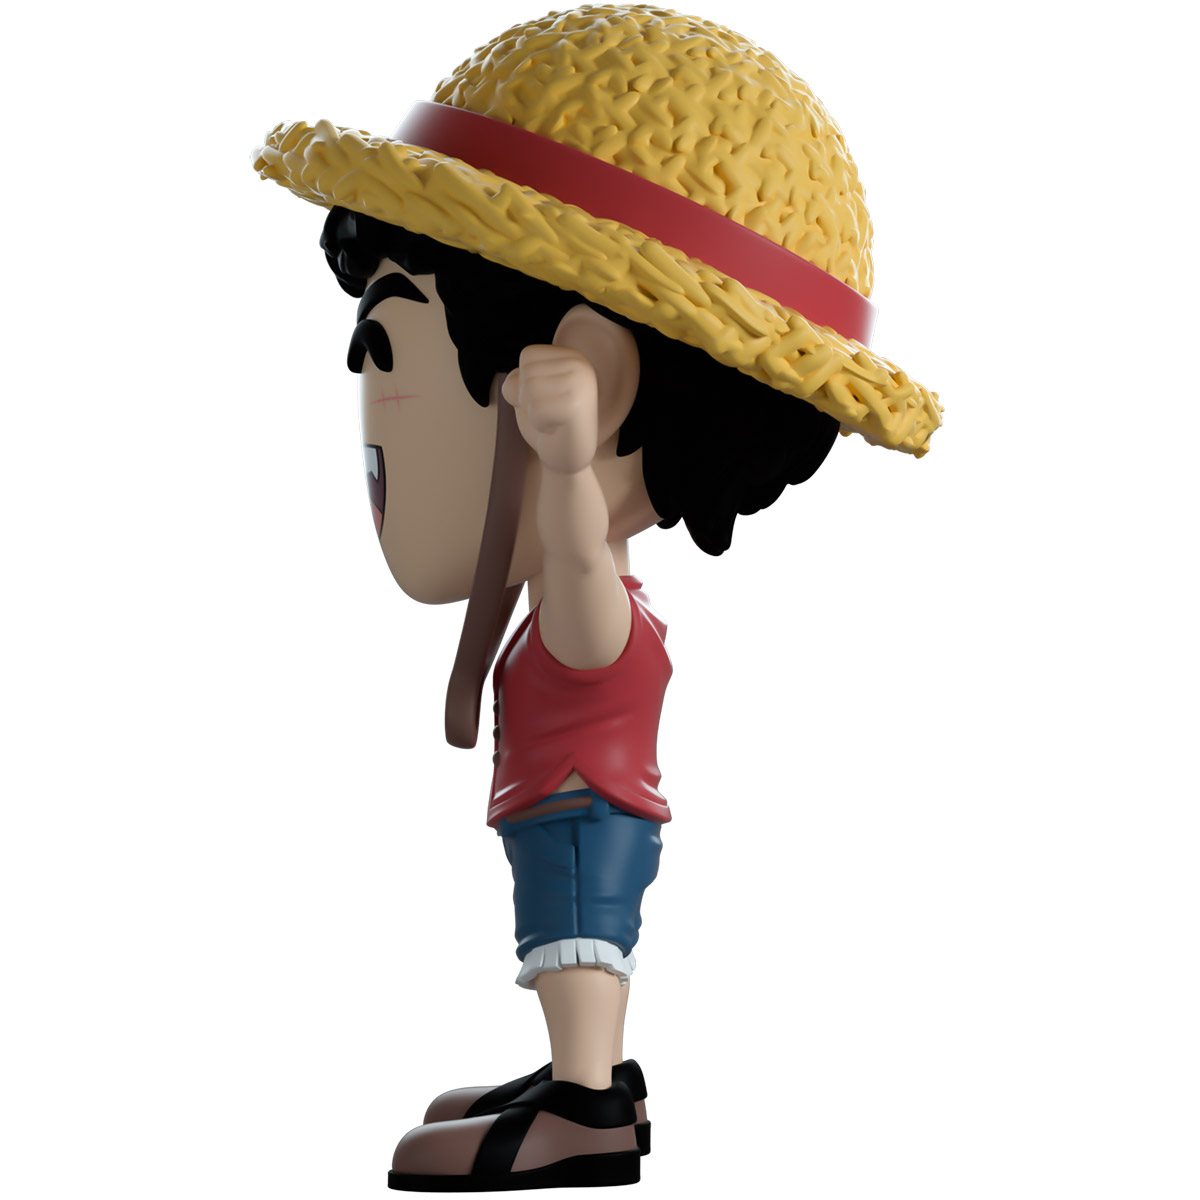 ONE PIECE Figurine Straw Hat Luffy 7 Inch